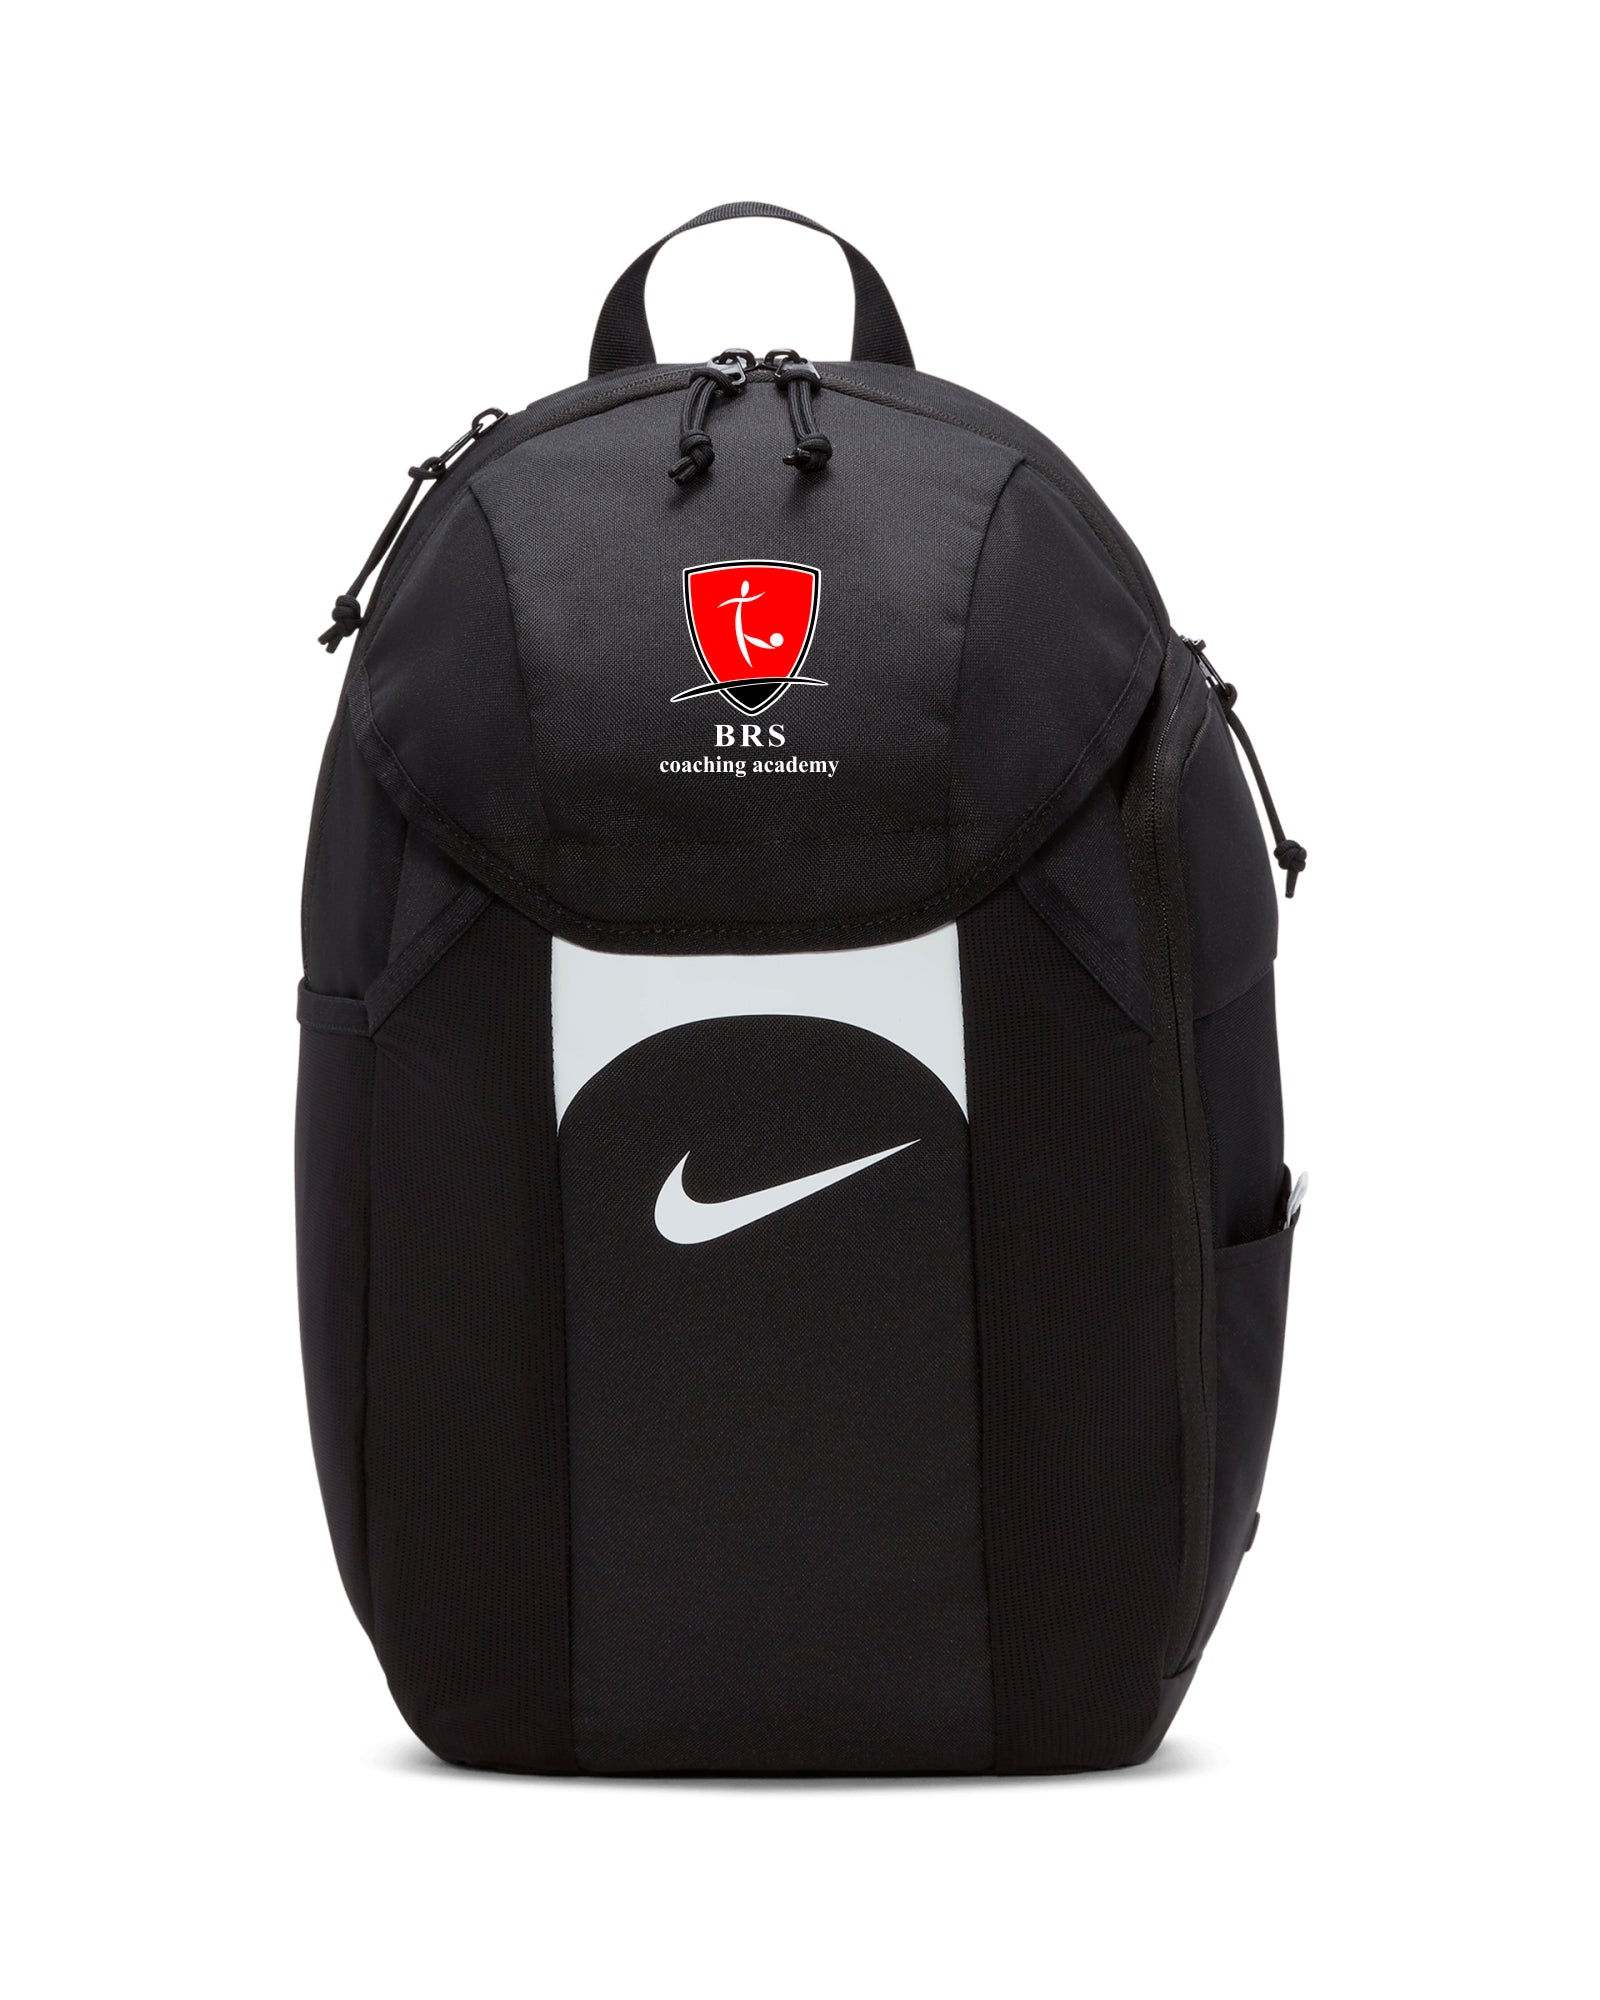 BRS - Nike Academy Team Backpack - Black